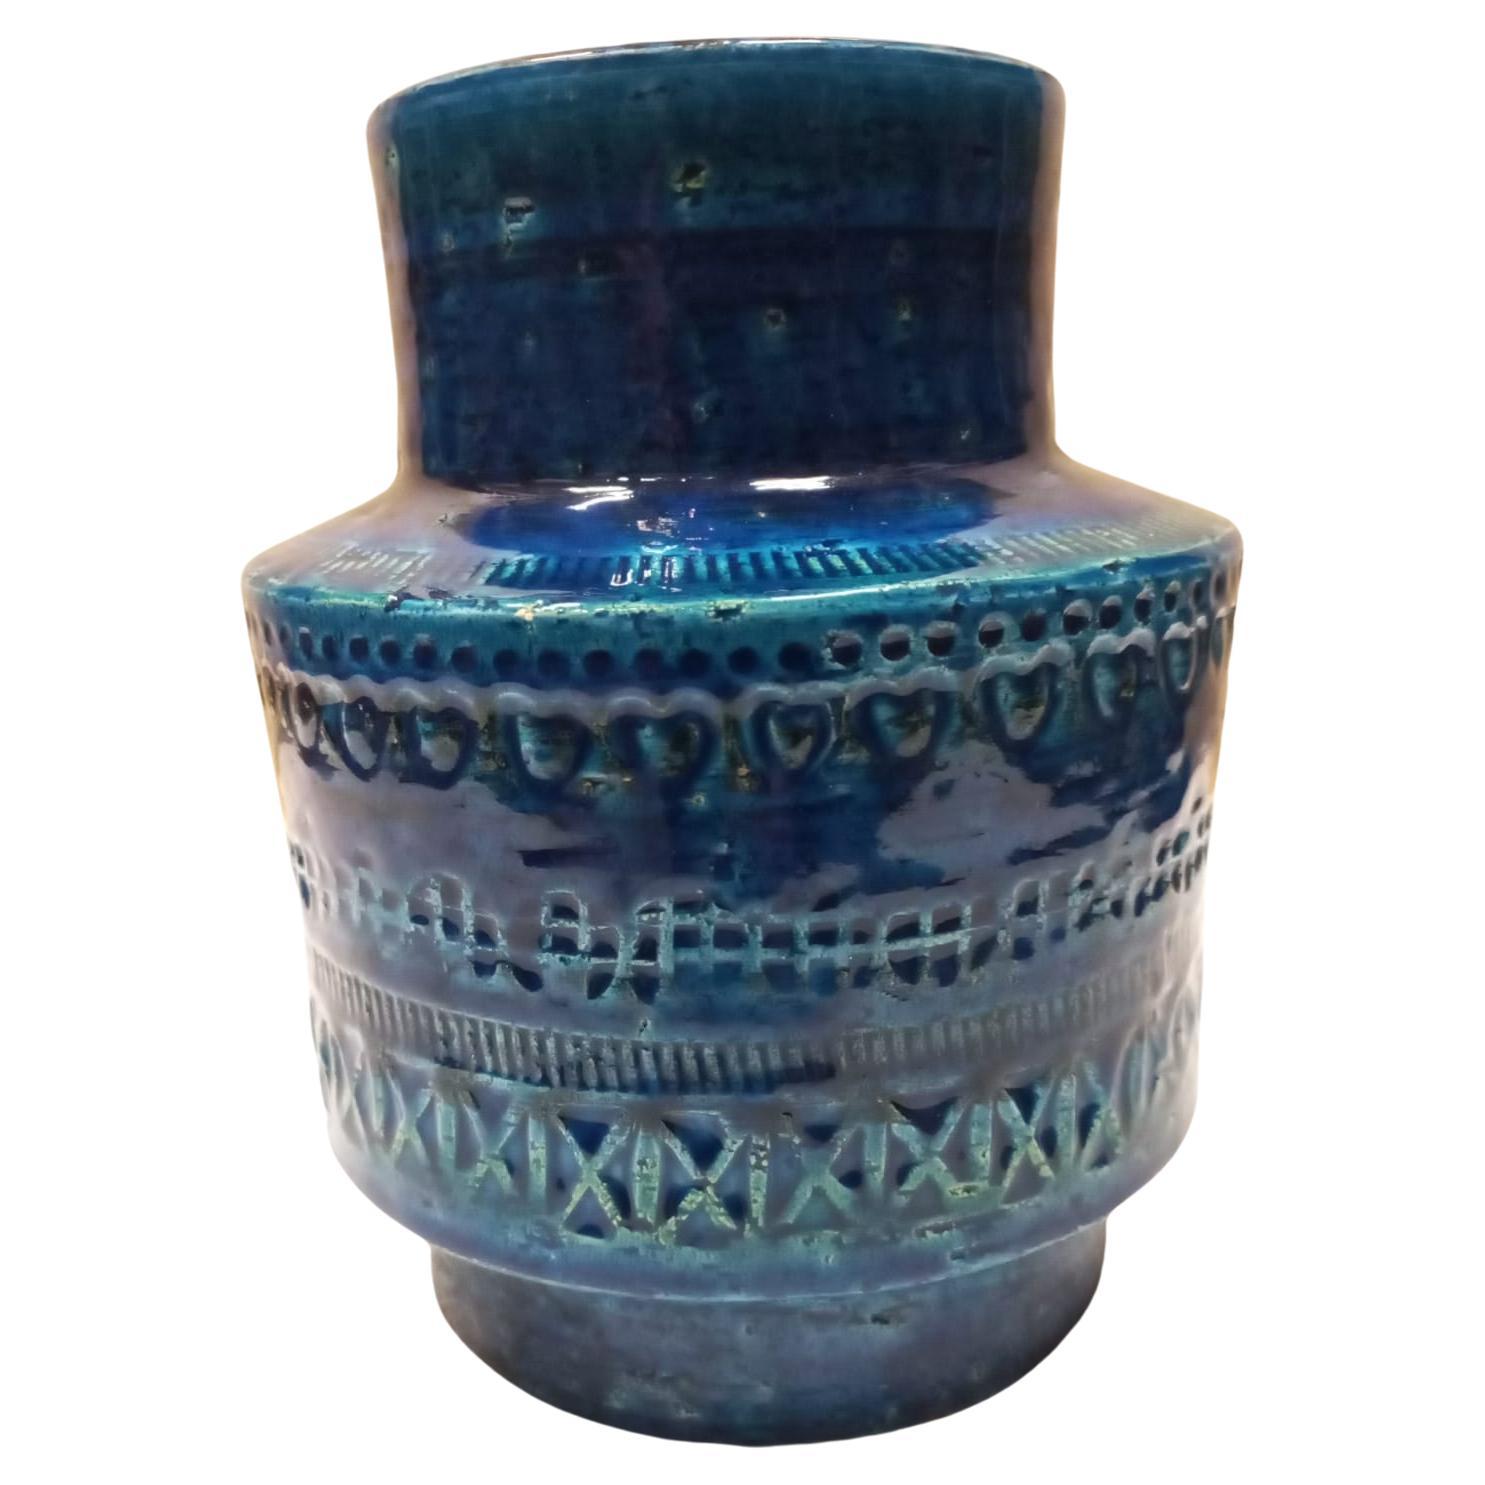 Aldo londi circular ceramic Vase, blue glazed, Bitossi, mid 20th century, good condition.